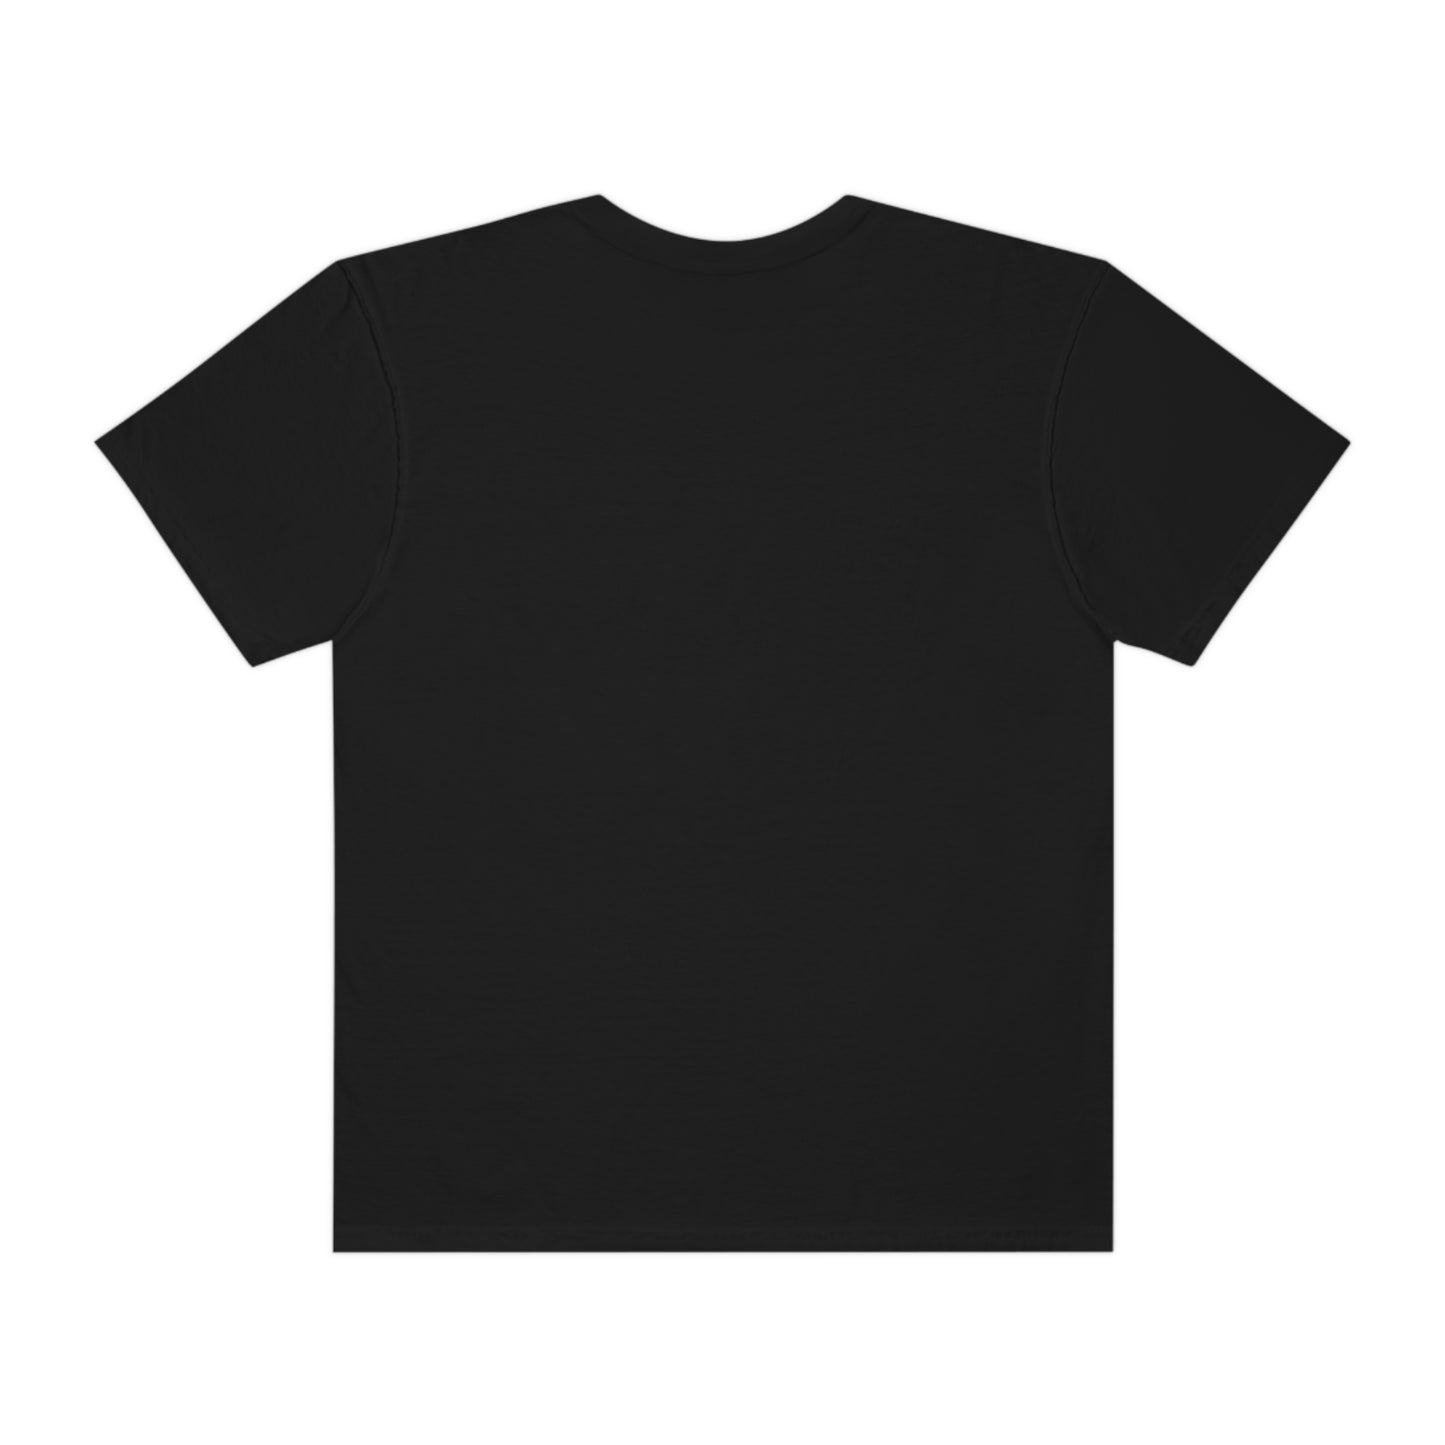 Edwards Timberwolves Basketball Unisex Garment-Dyed T-shirt